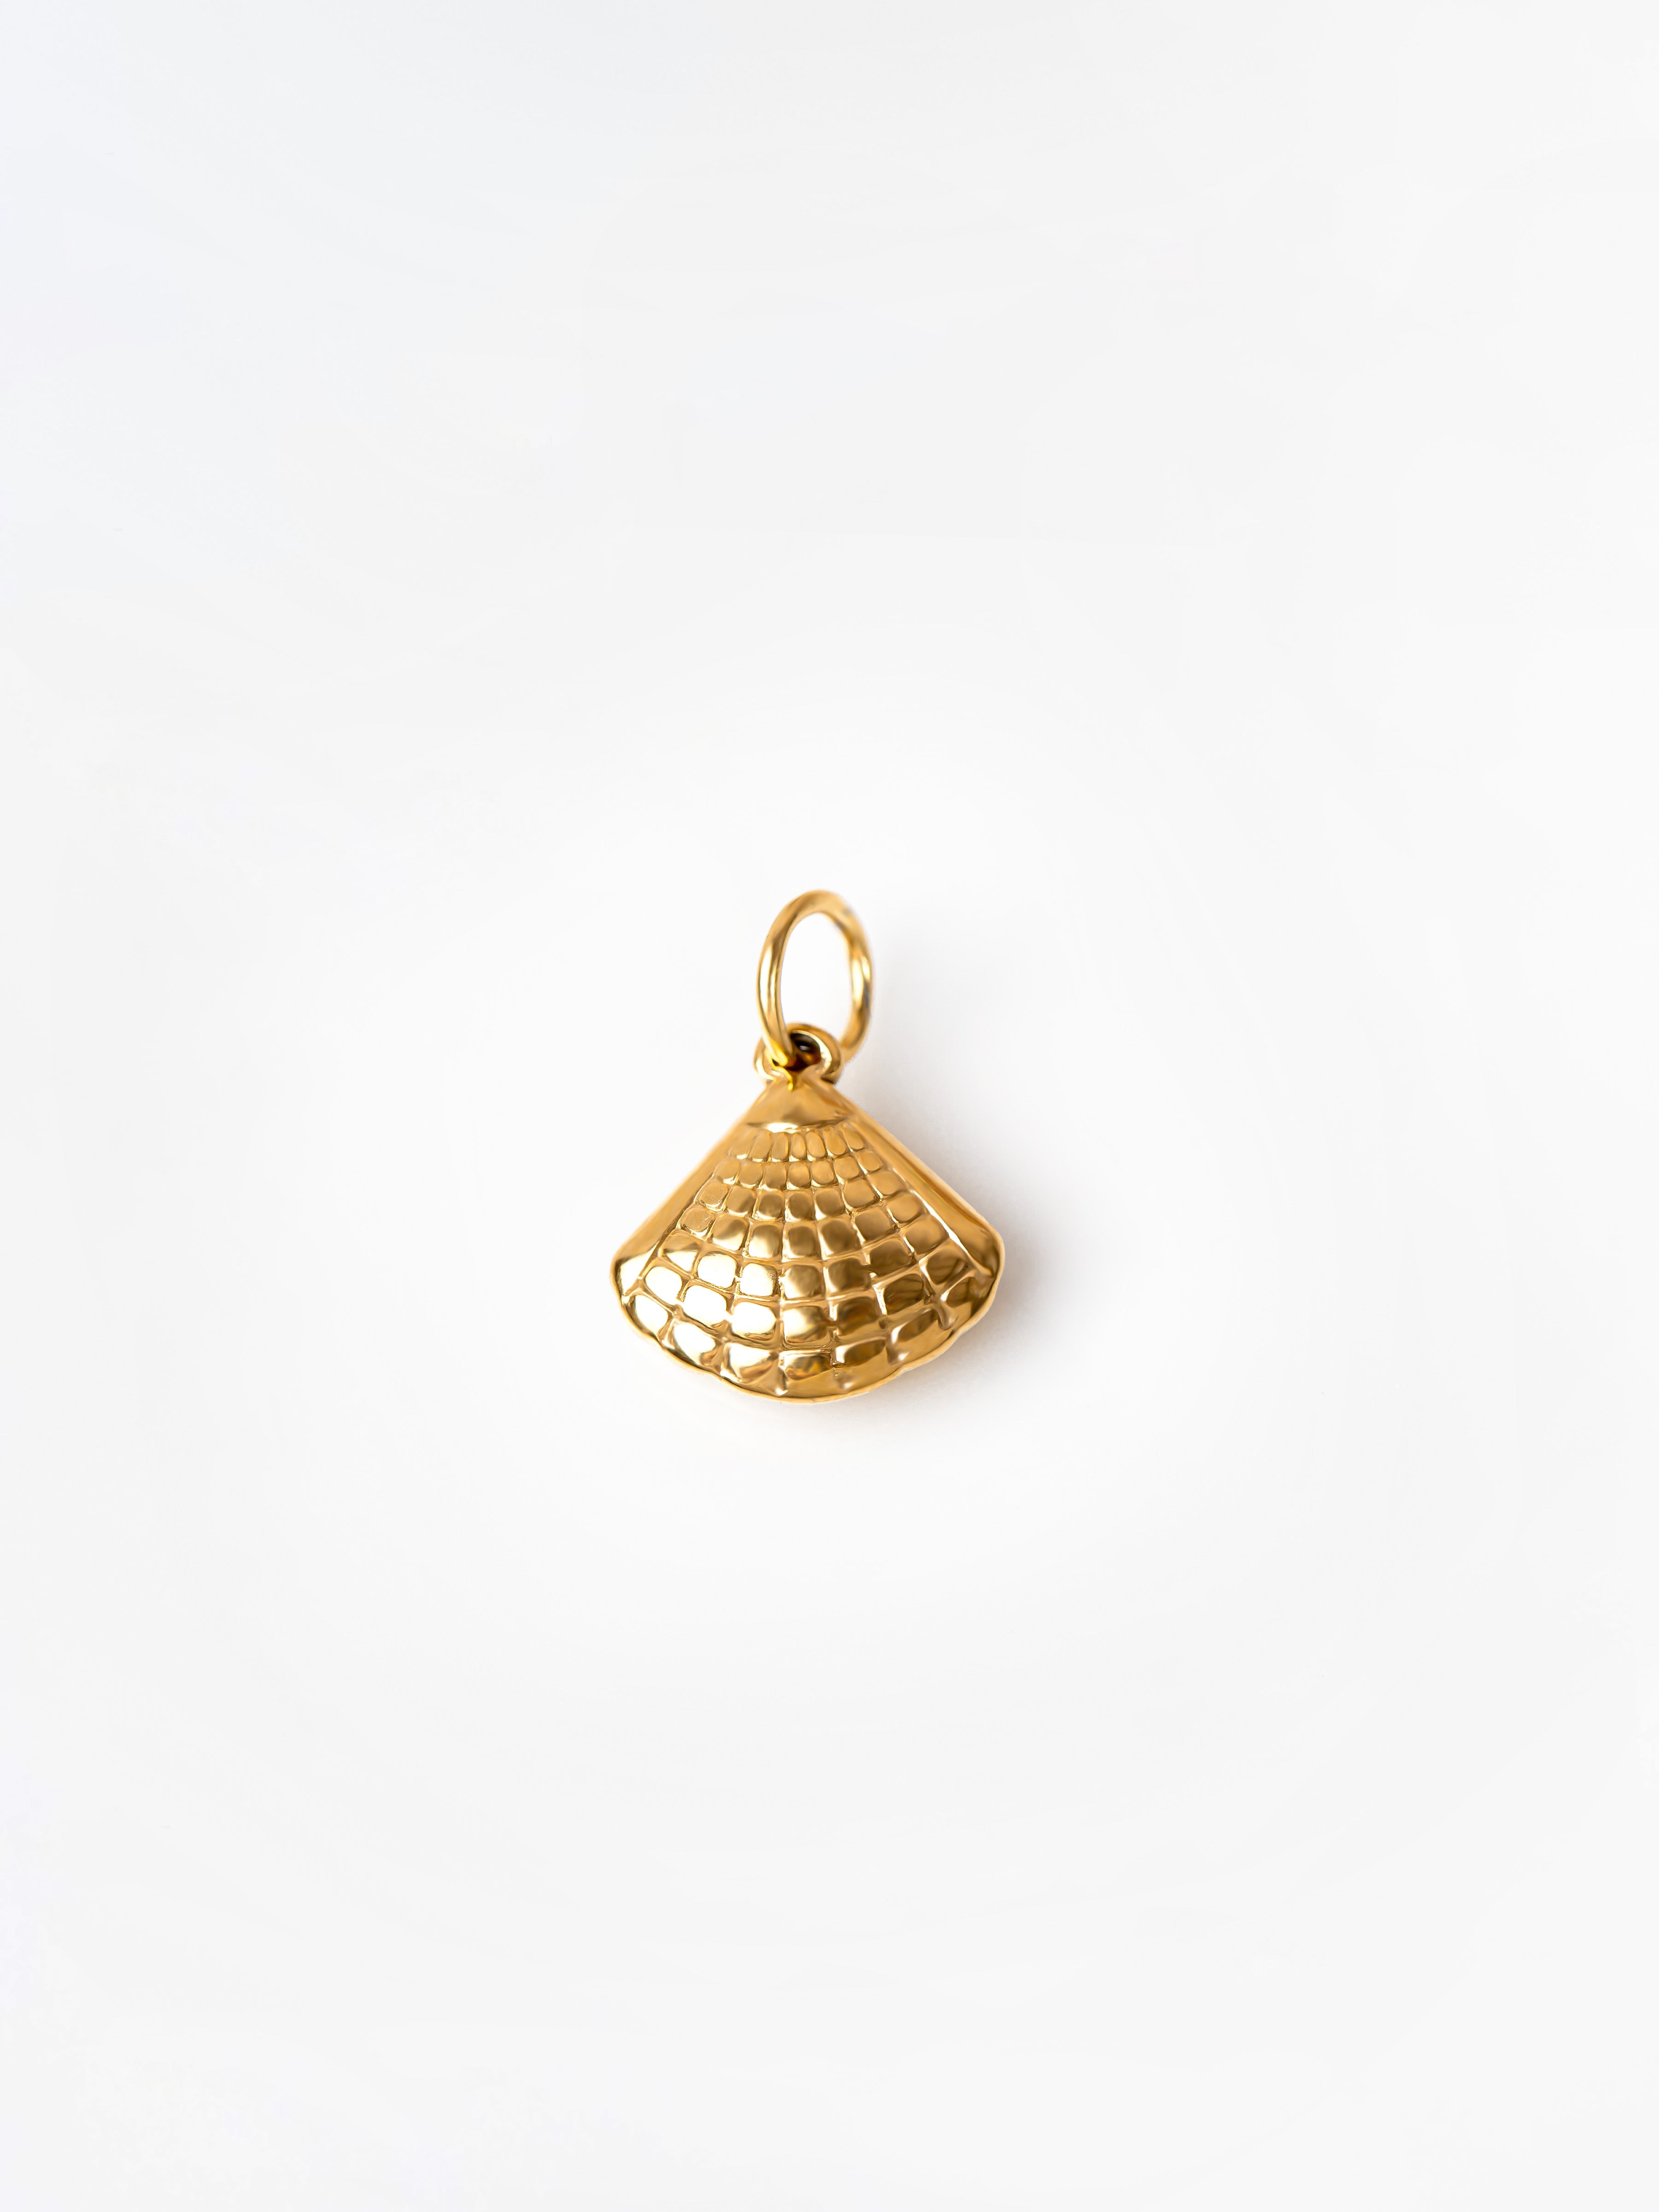 Gold Small Sea Shell Pendant / Charm